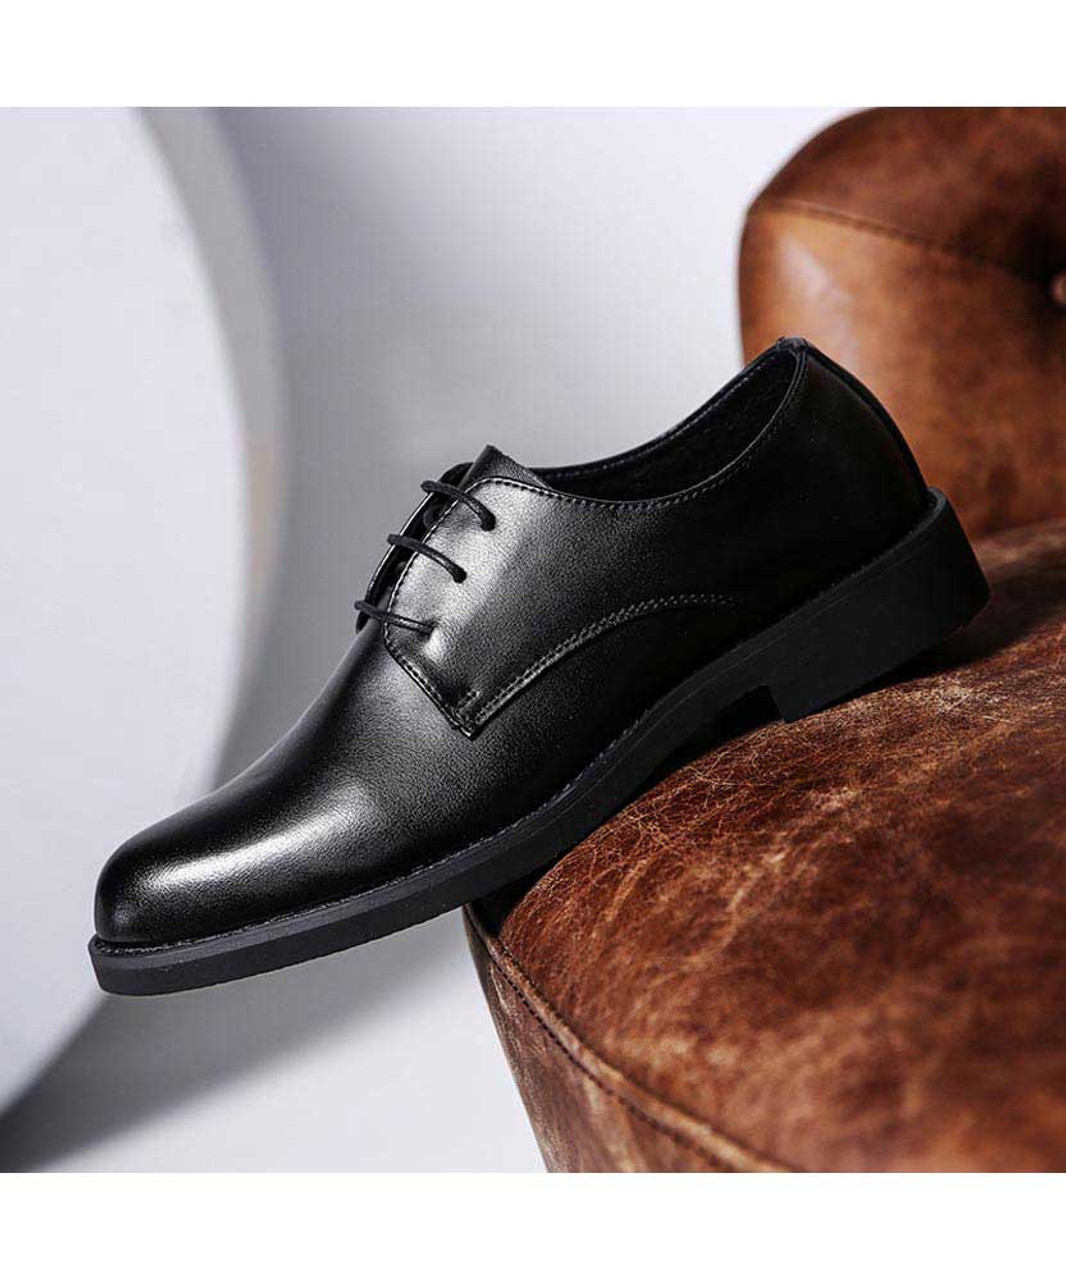 Black derby dress shoe in plain | Mens dress shoes online 1584MS